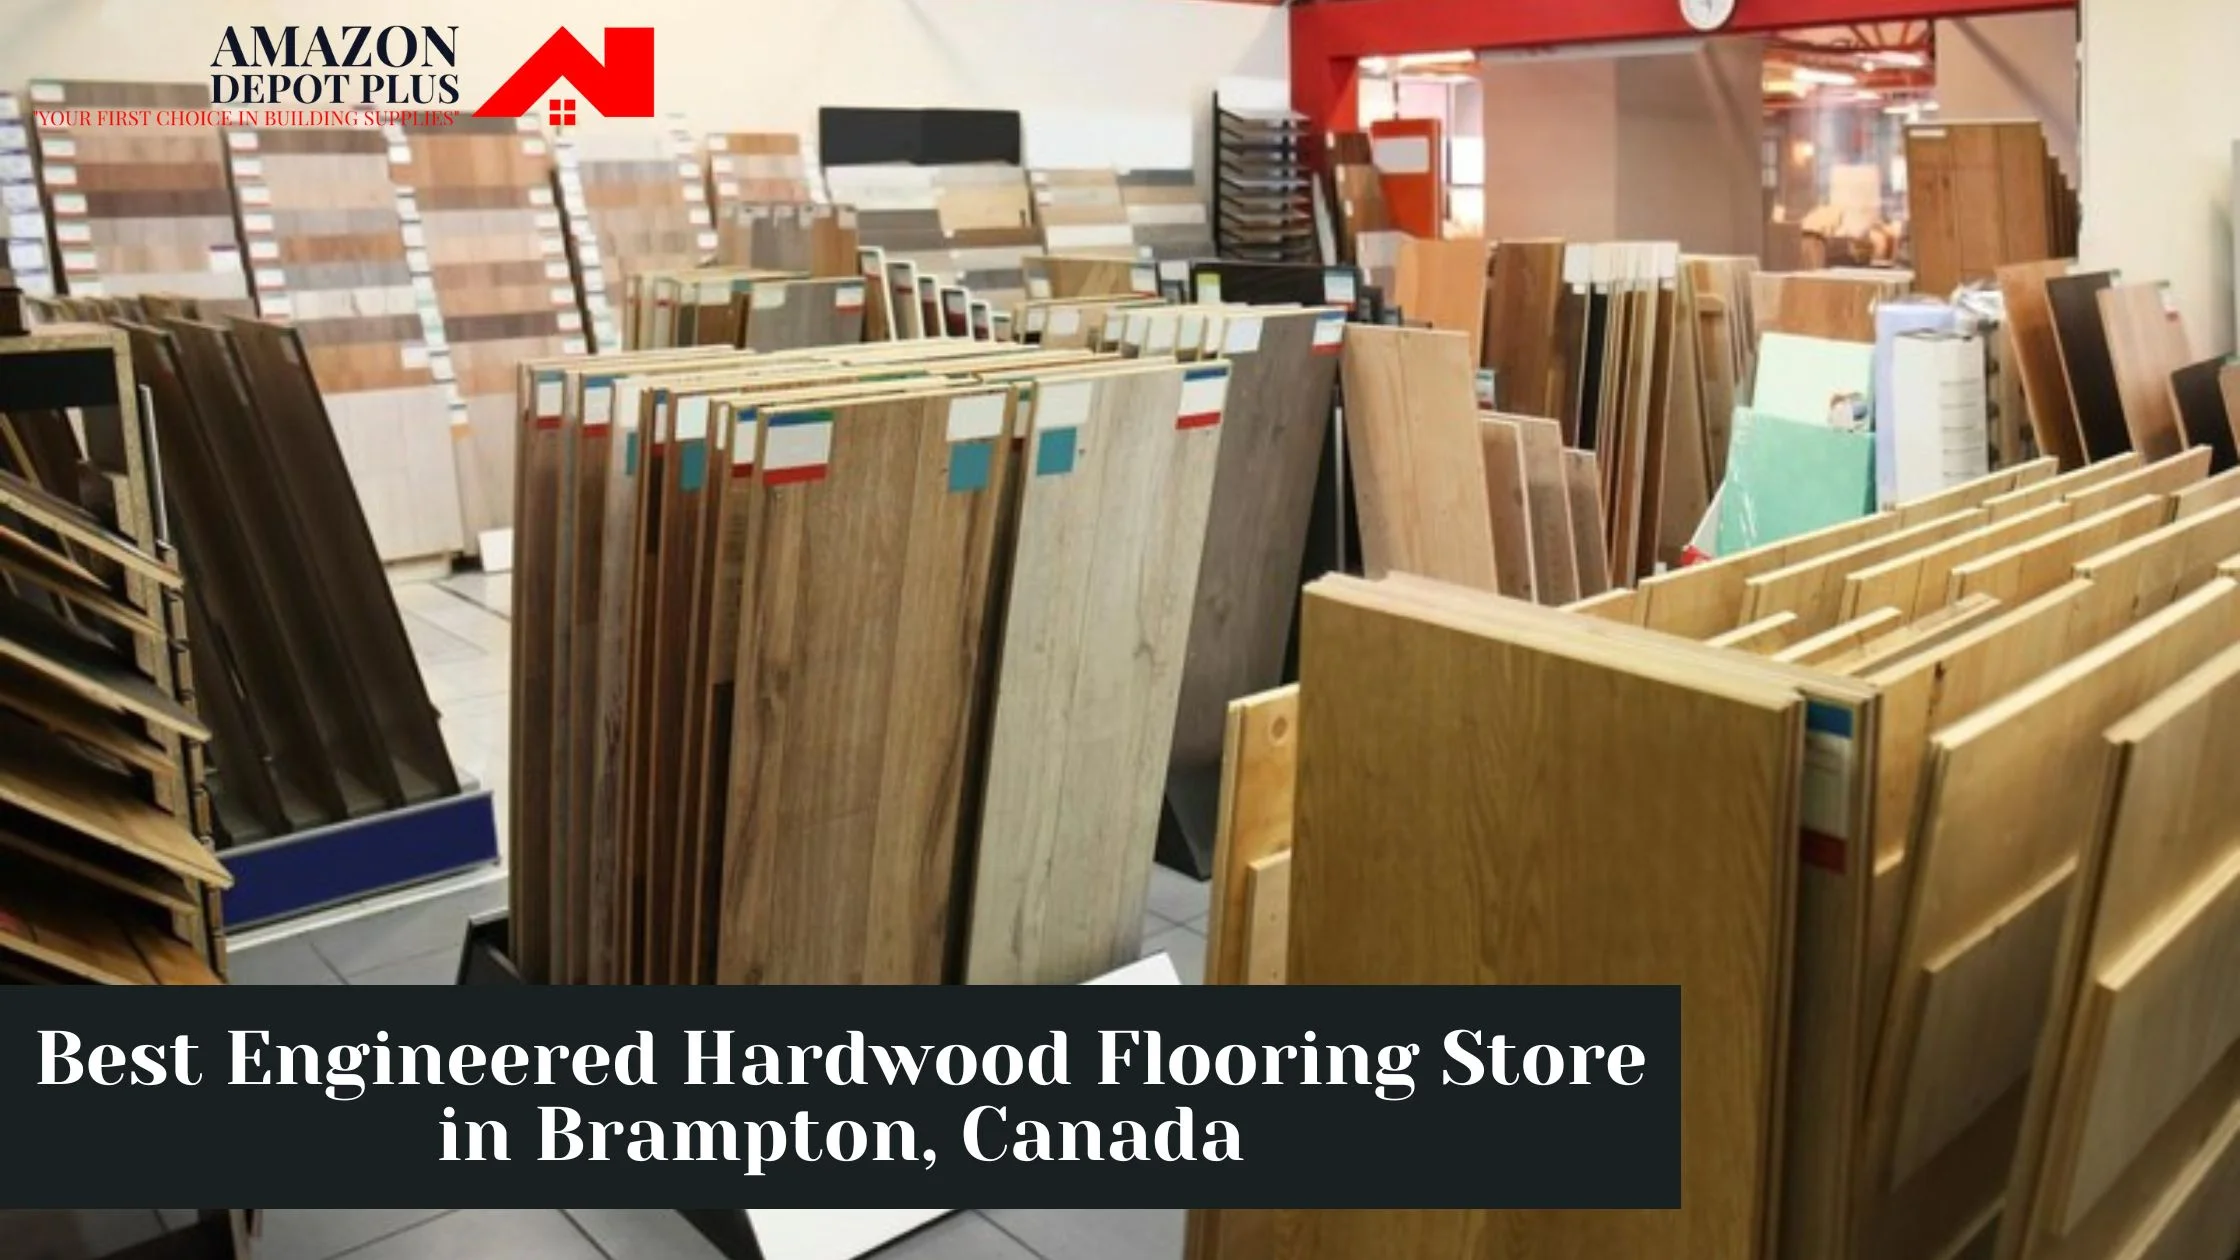 Best Engineered Hardwood Flooring Store in Brampton, Canada